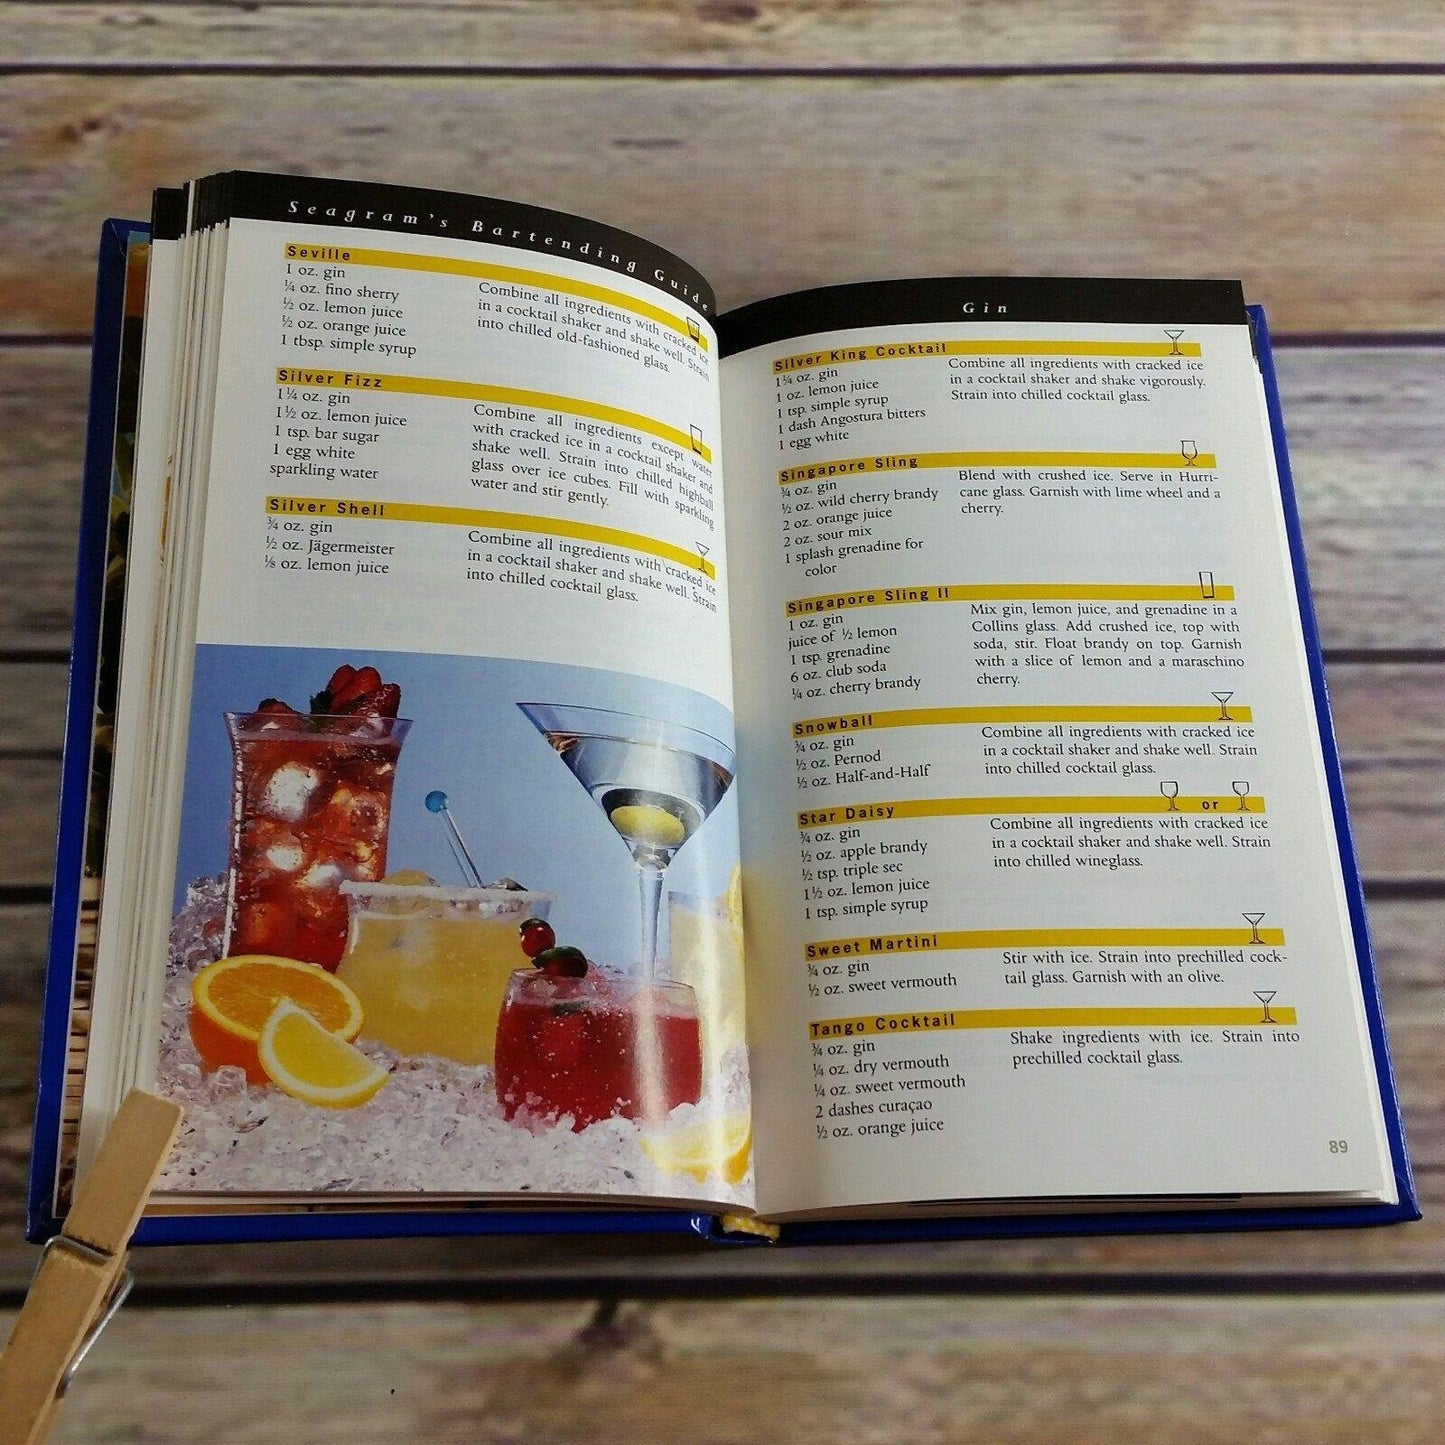 Vtg Seagrams Bartending Guide Bartenders Recipes Cookbook Food and Drink 1995